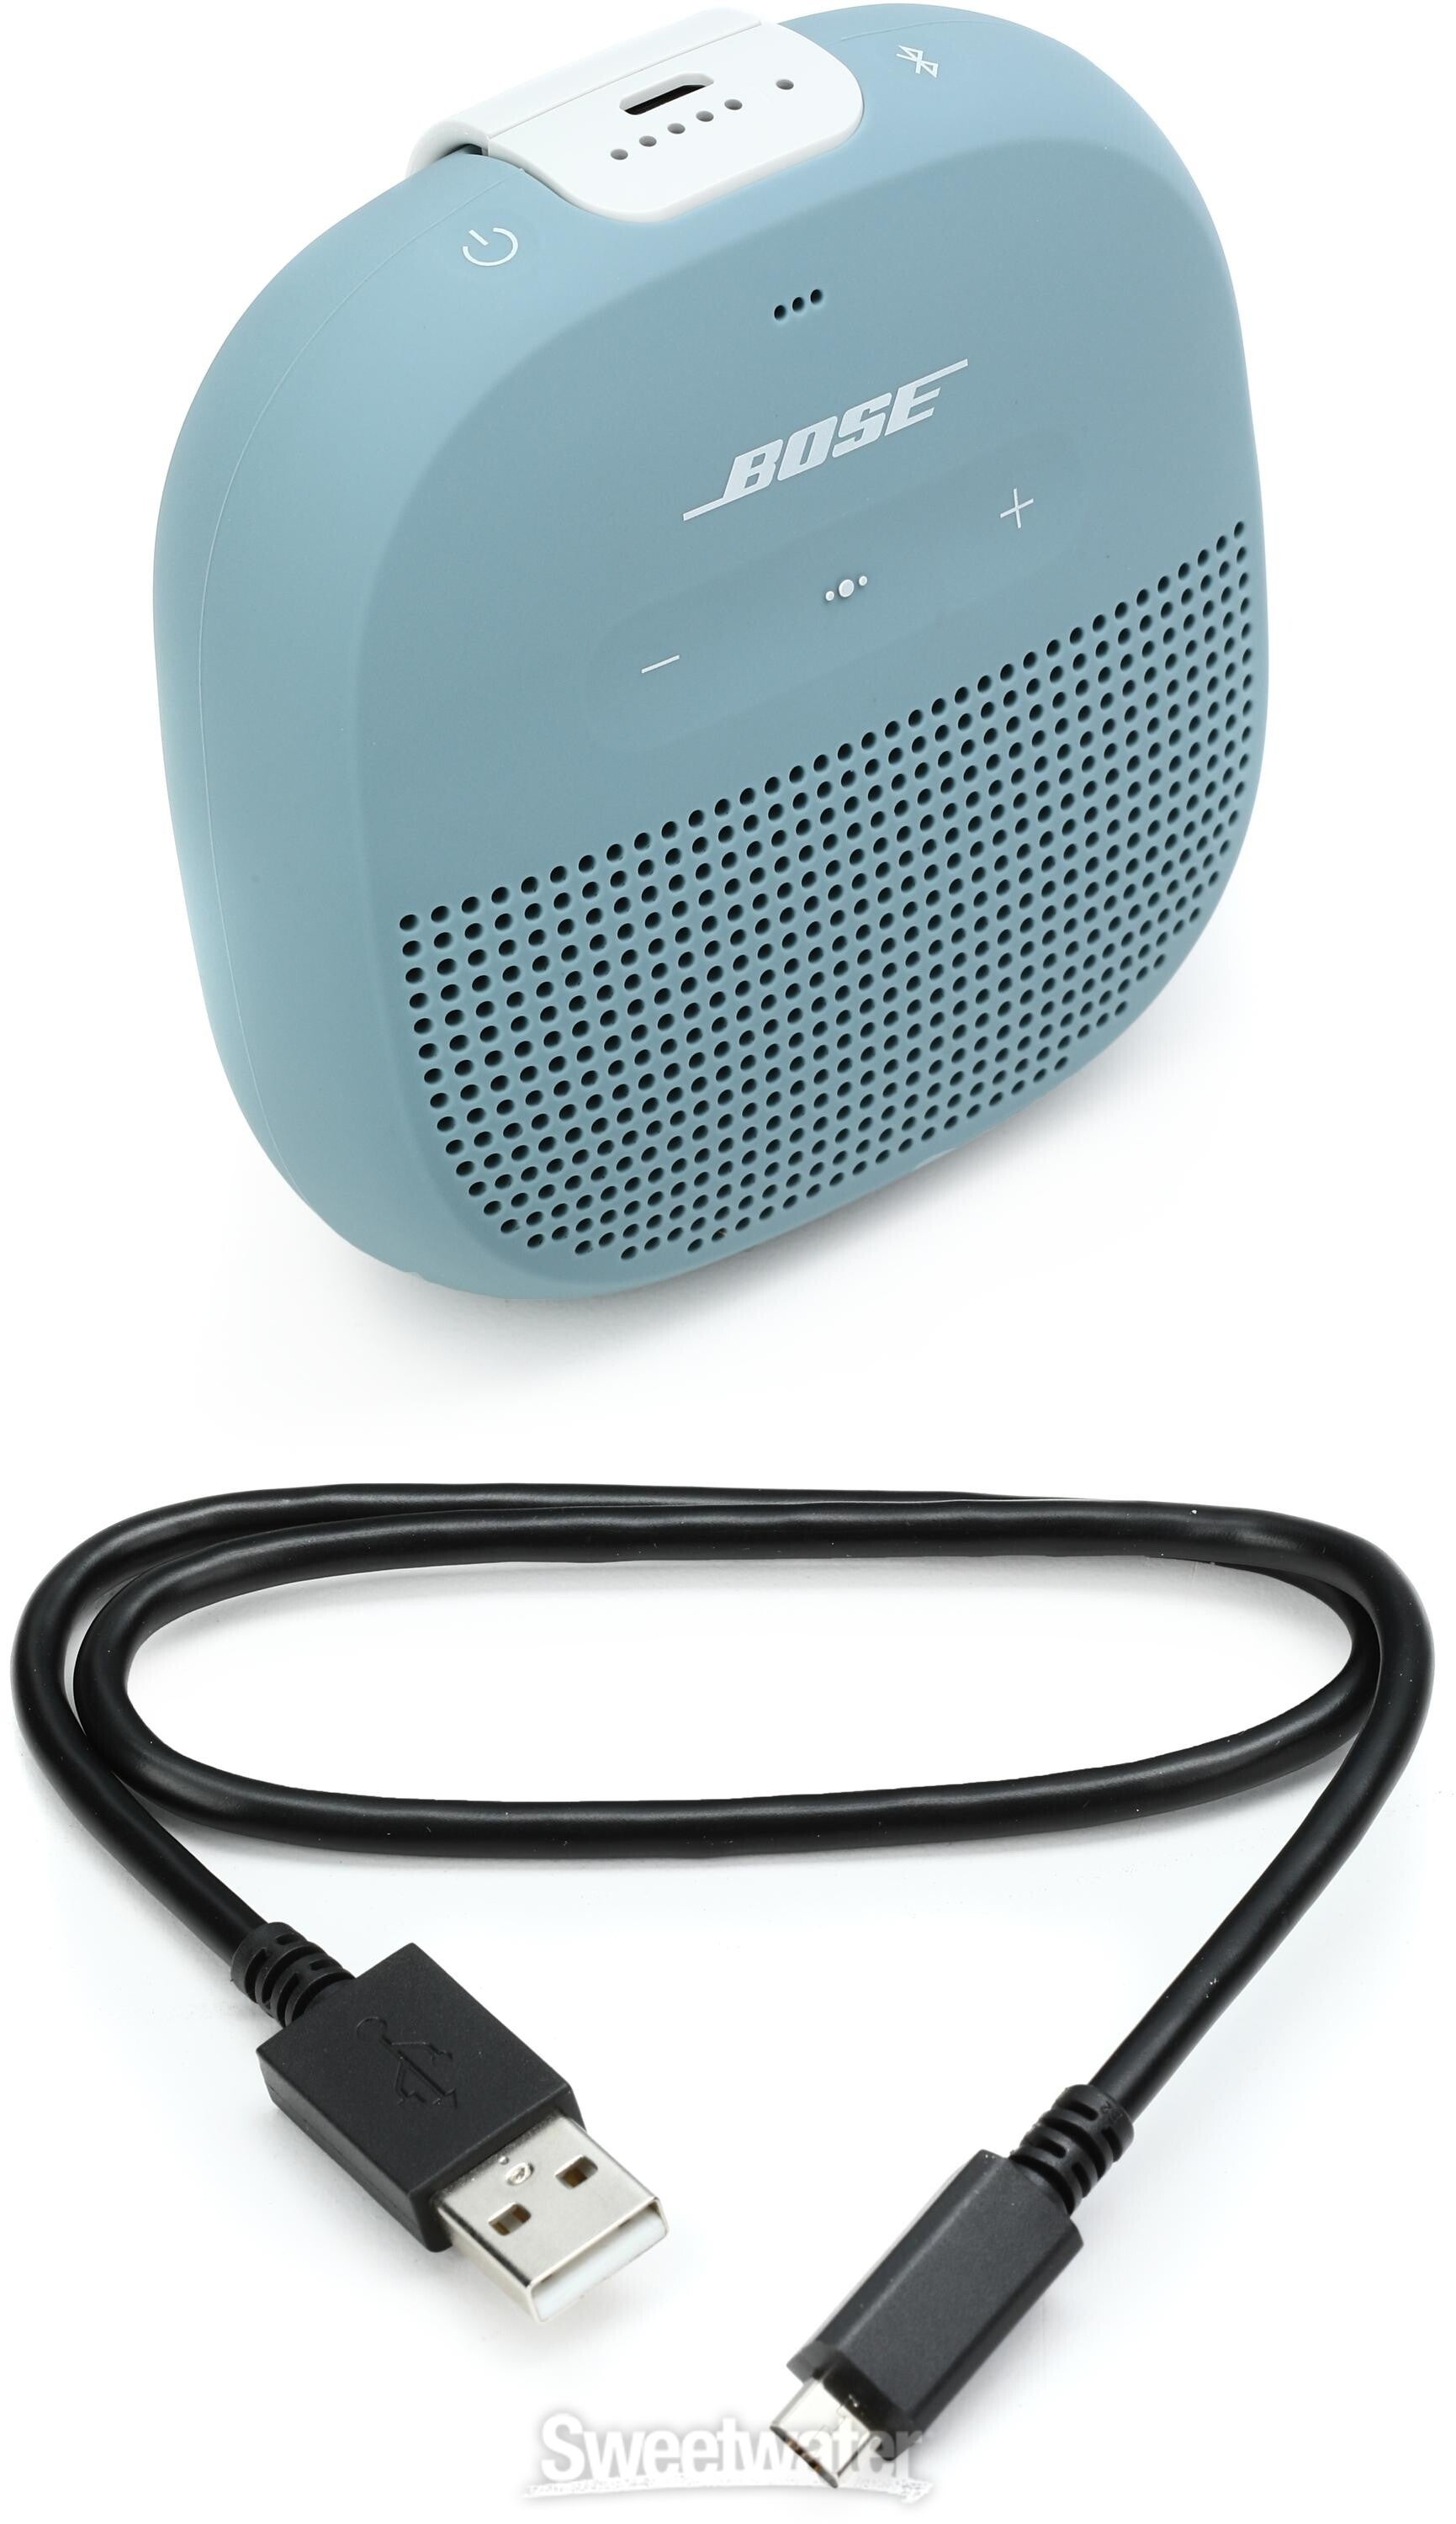 Bose SoundLink Micro Bluetooth Speaker - Stone Blue Reviews